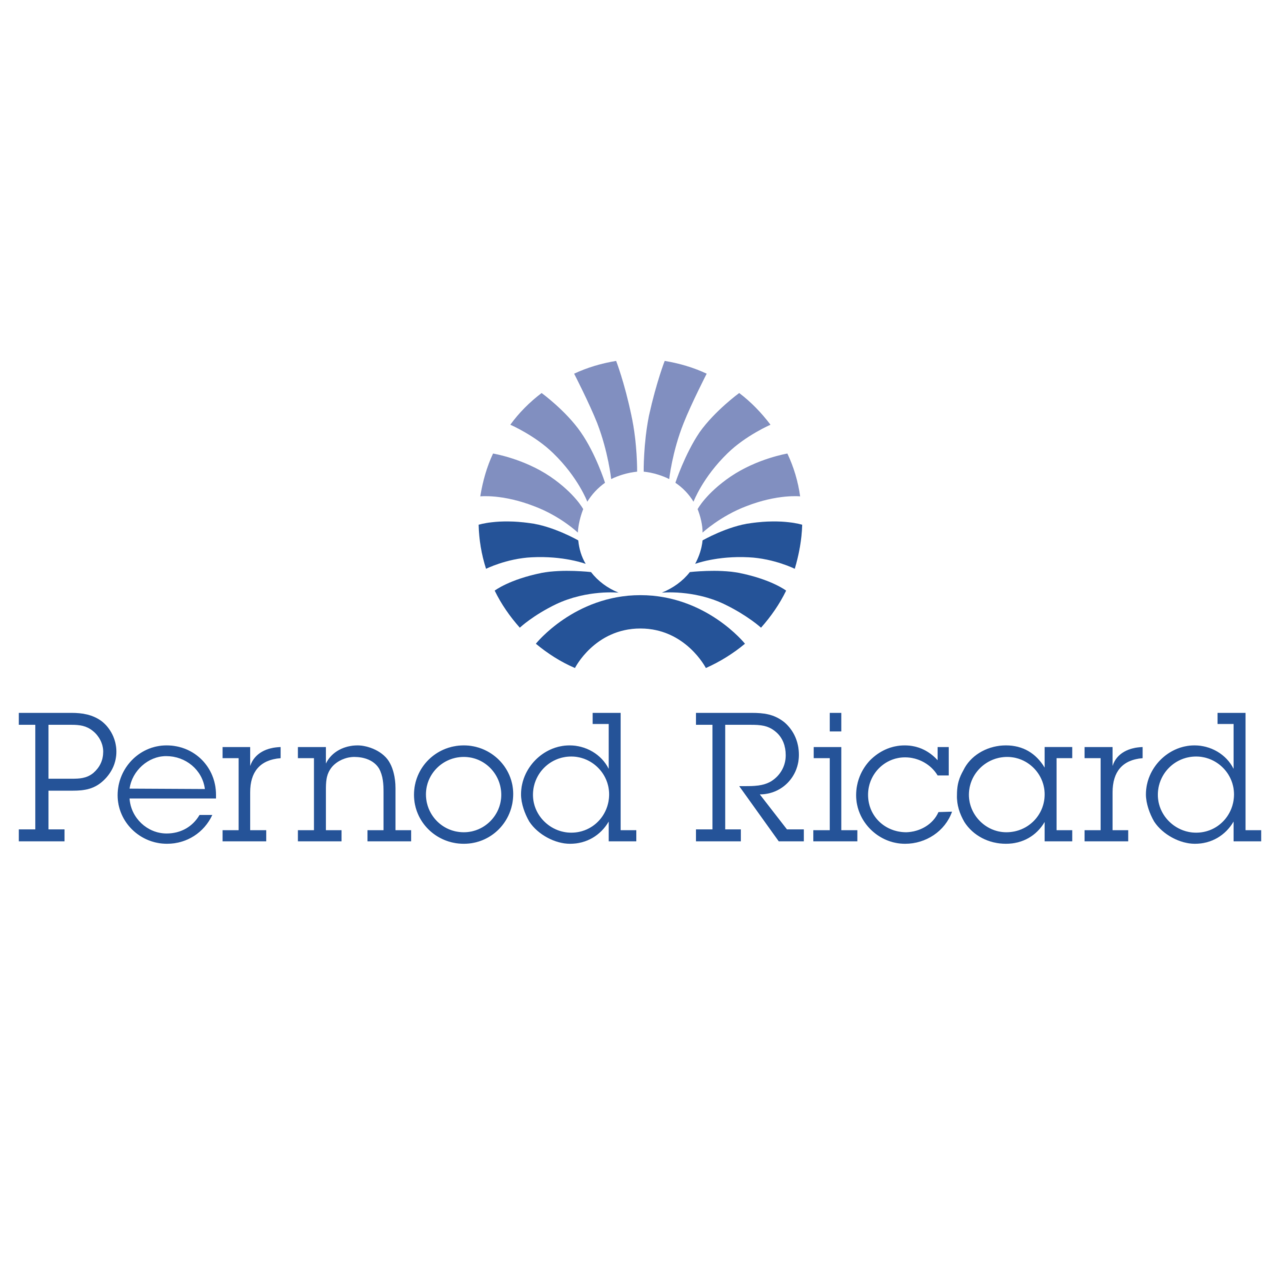 pernod-ricard-logo.png